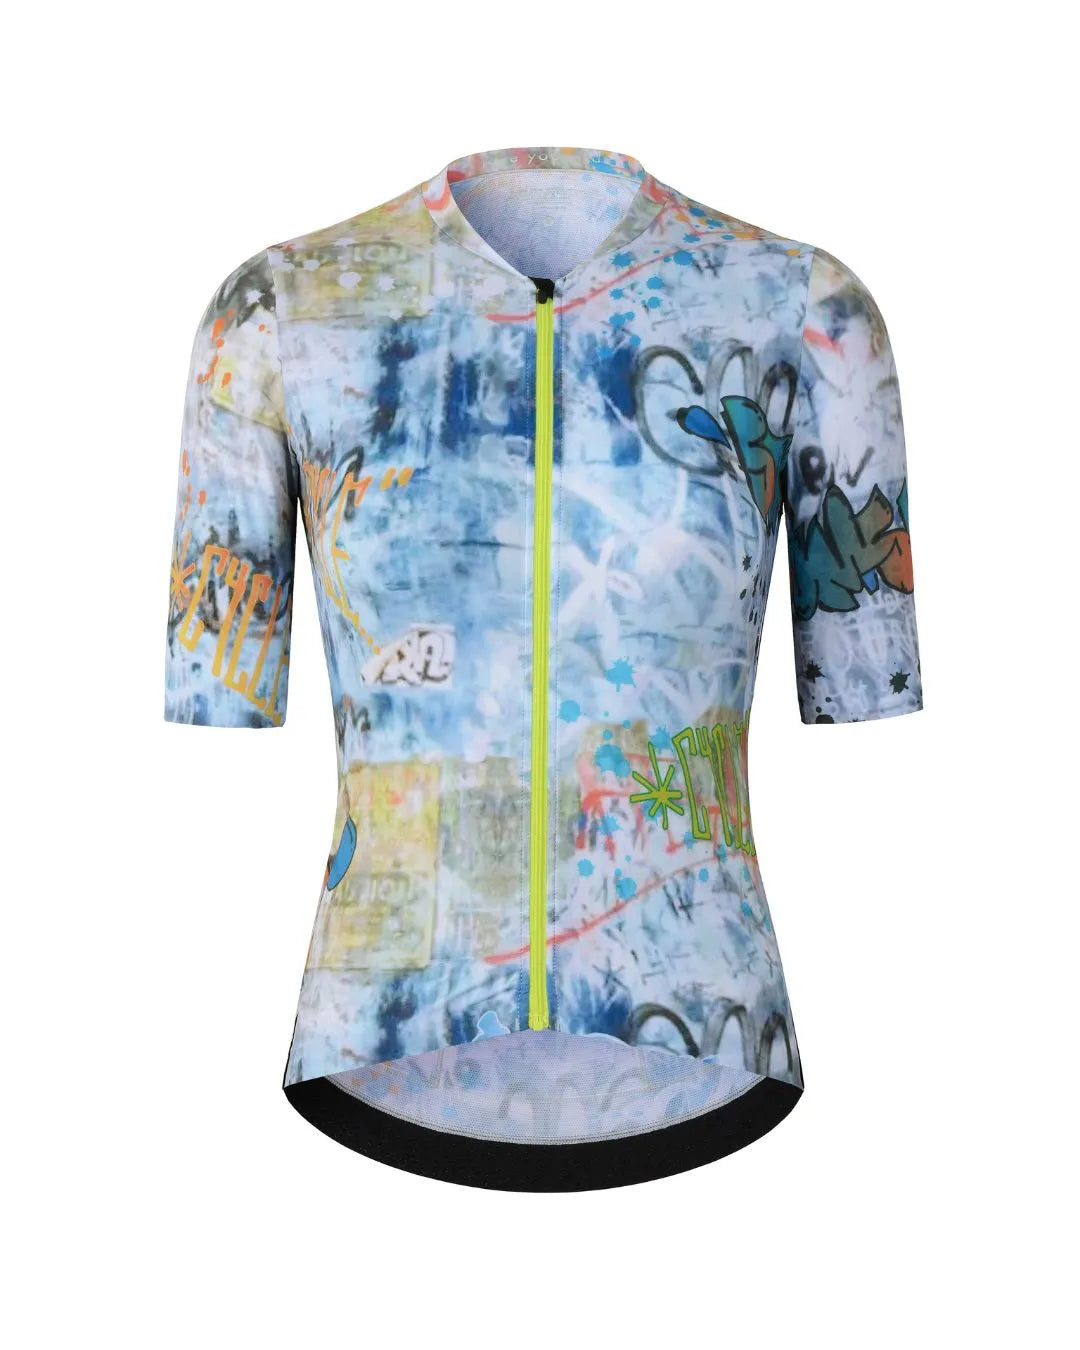 Endurance Cycling Jersey - Graffiti, Short Sleeve Jerseys, Samsara Cycle, Bicycle Jerseys